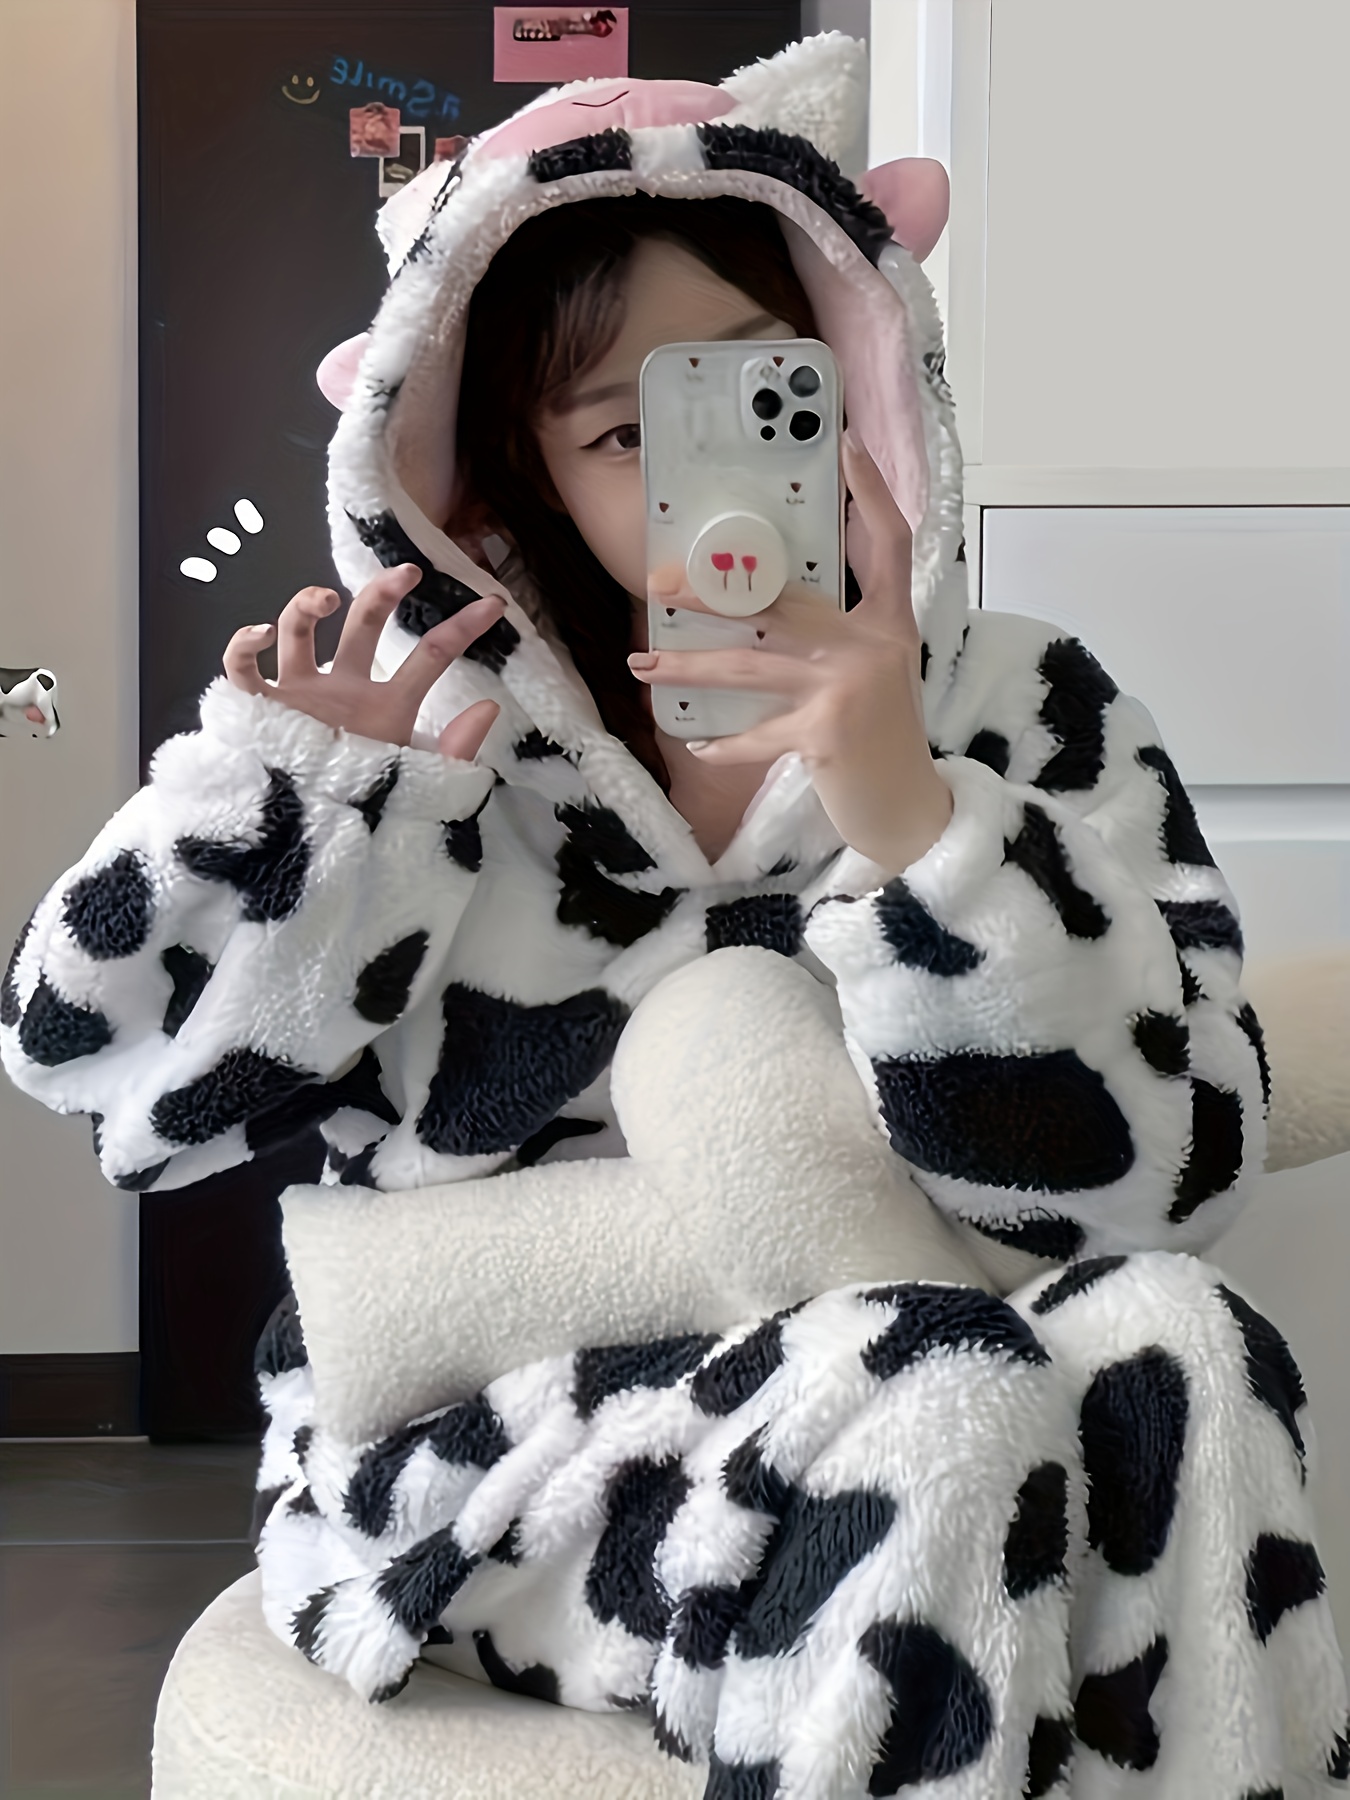 Fuzzy Panda Lingerie Set - Kawaii Fashion Shop